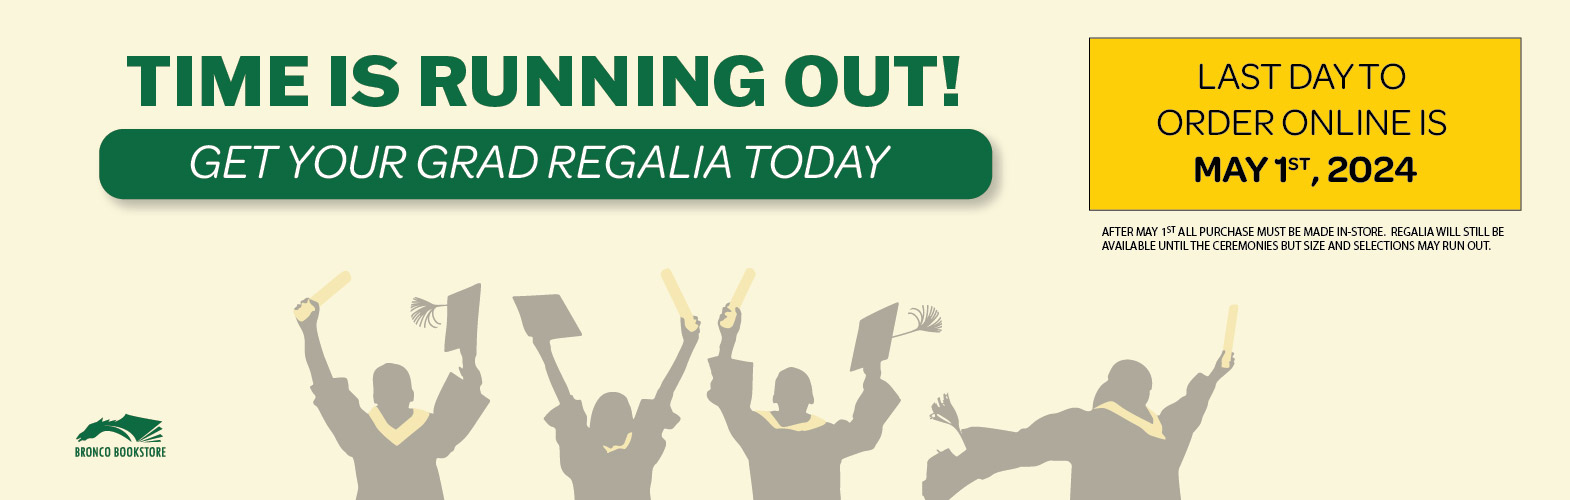 Regalia online ordering deadline May 1 